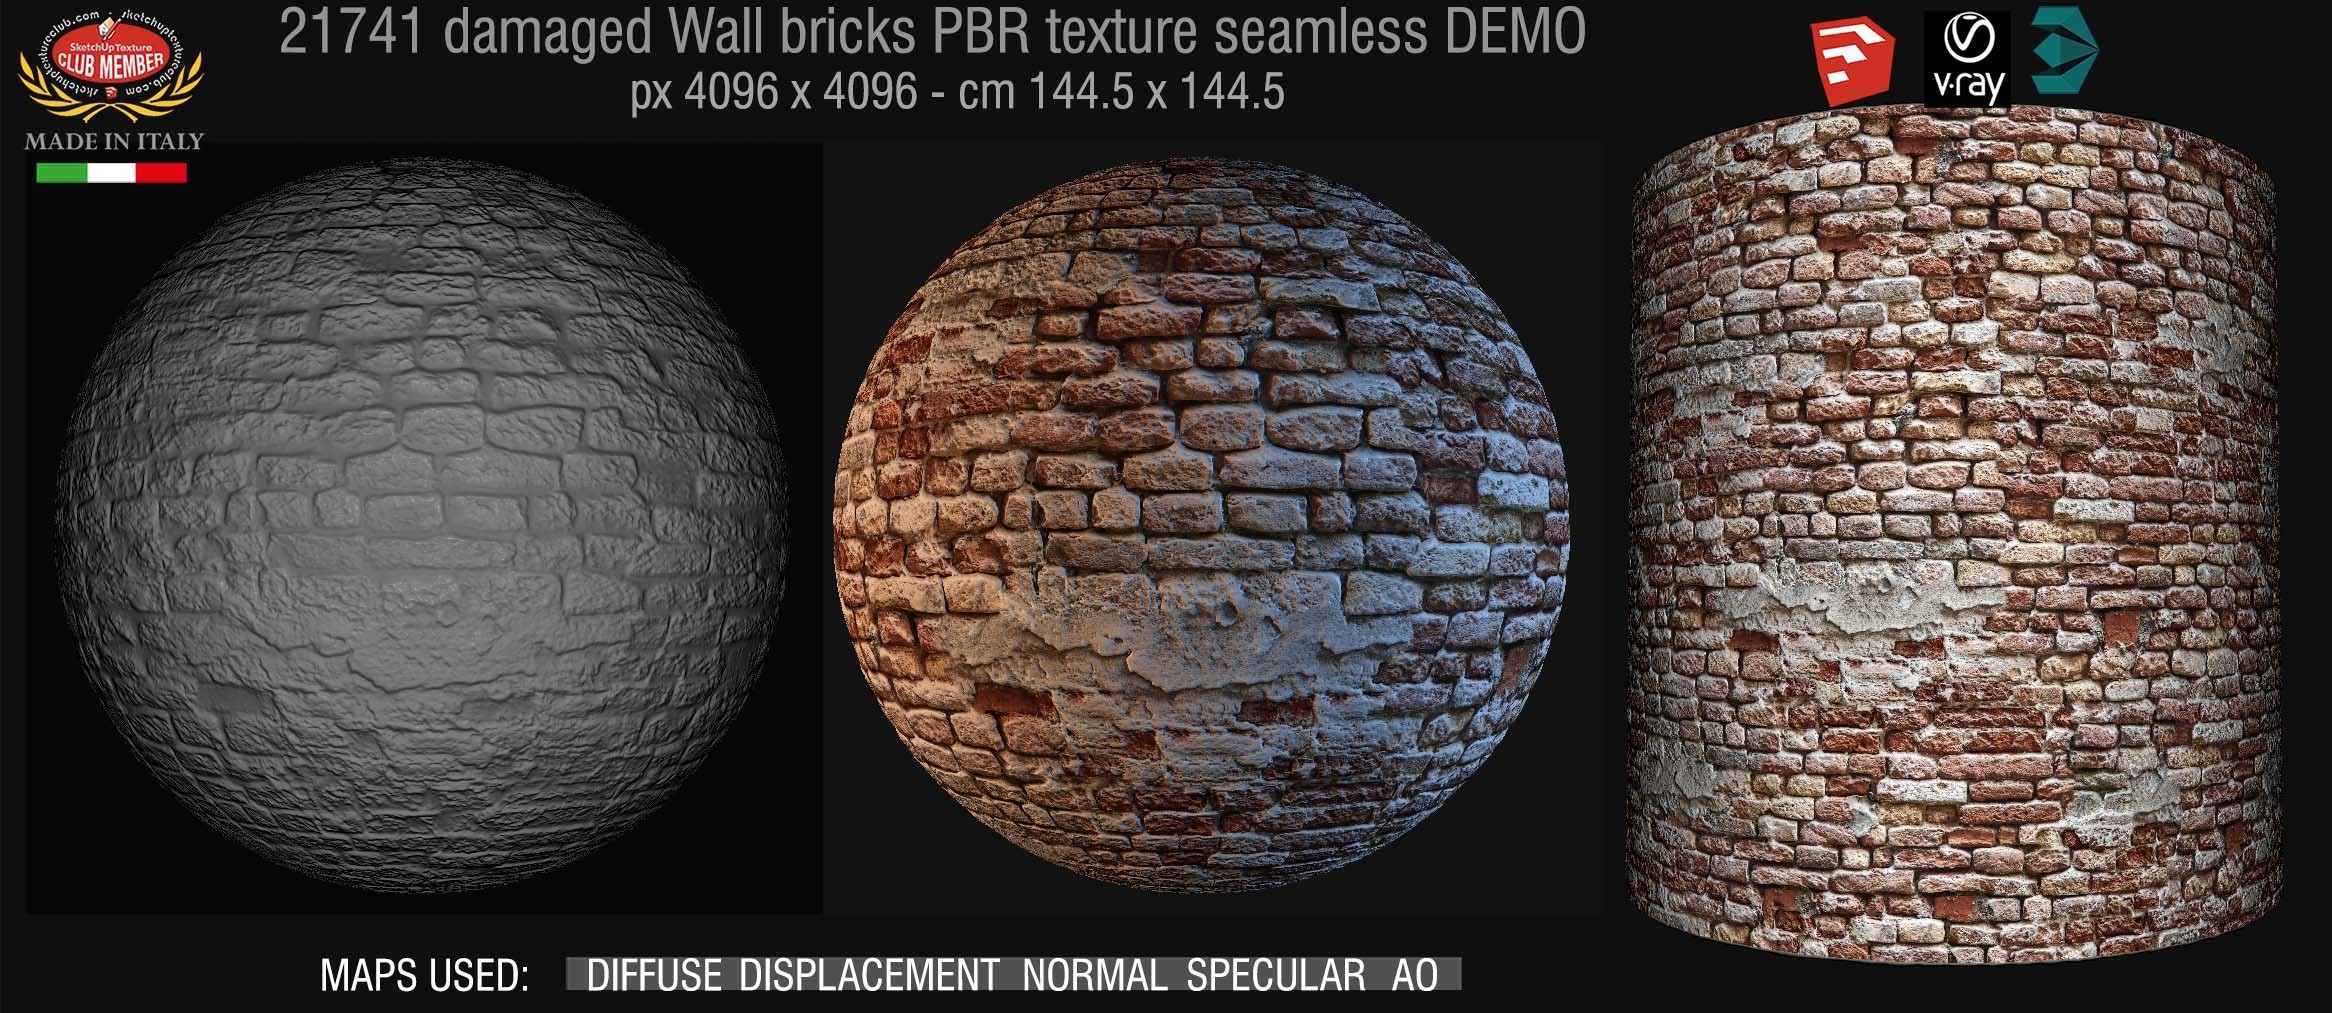 21741 damaged wall bricks PBR texture seamless DEMO